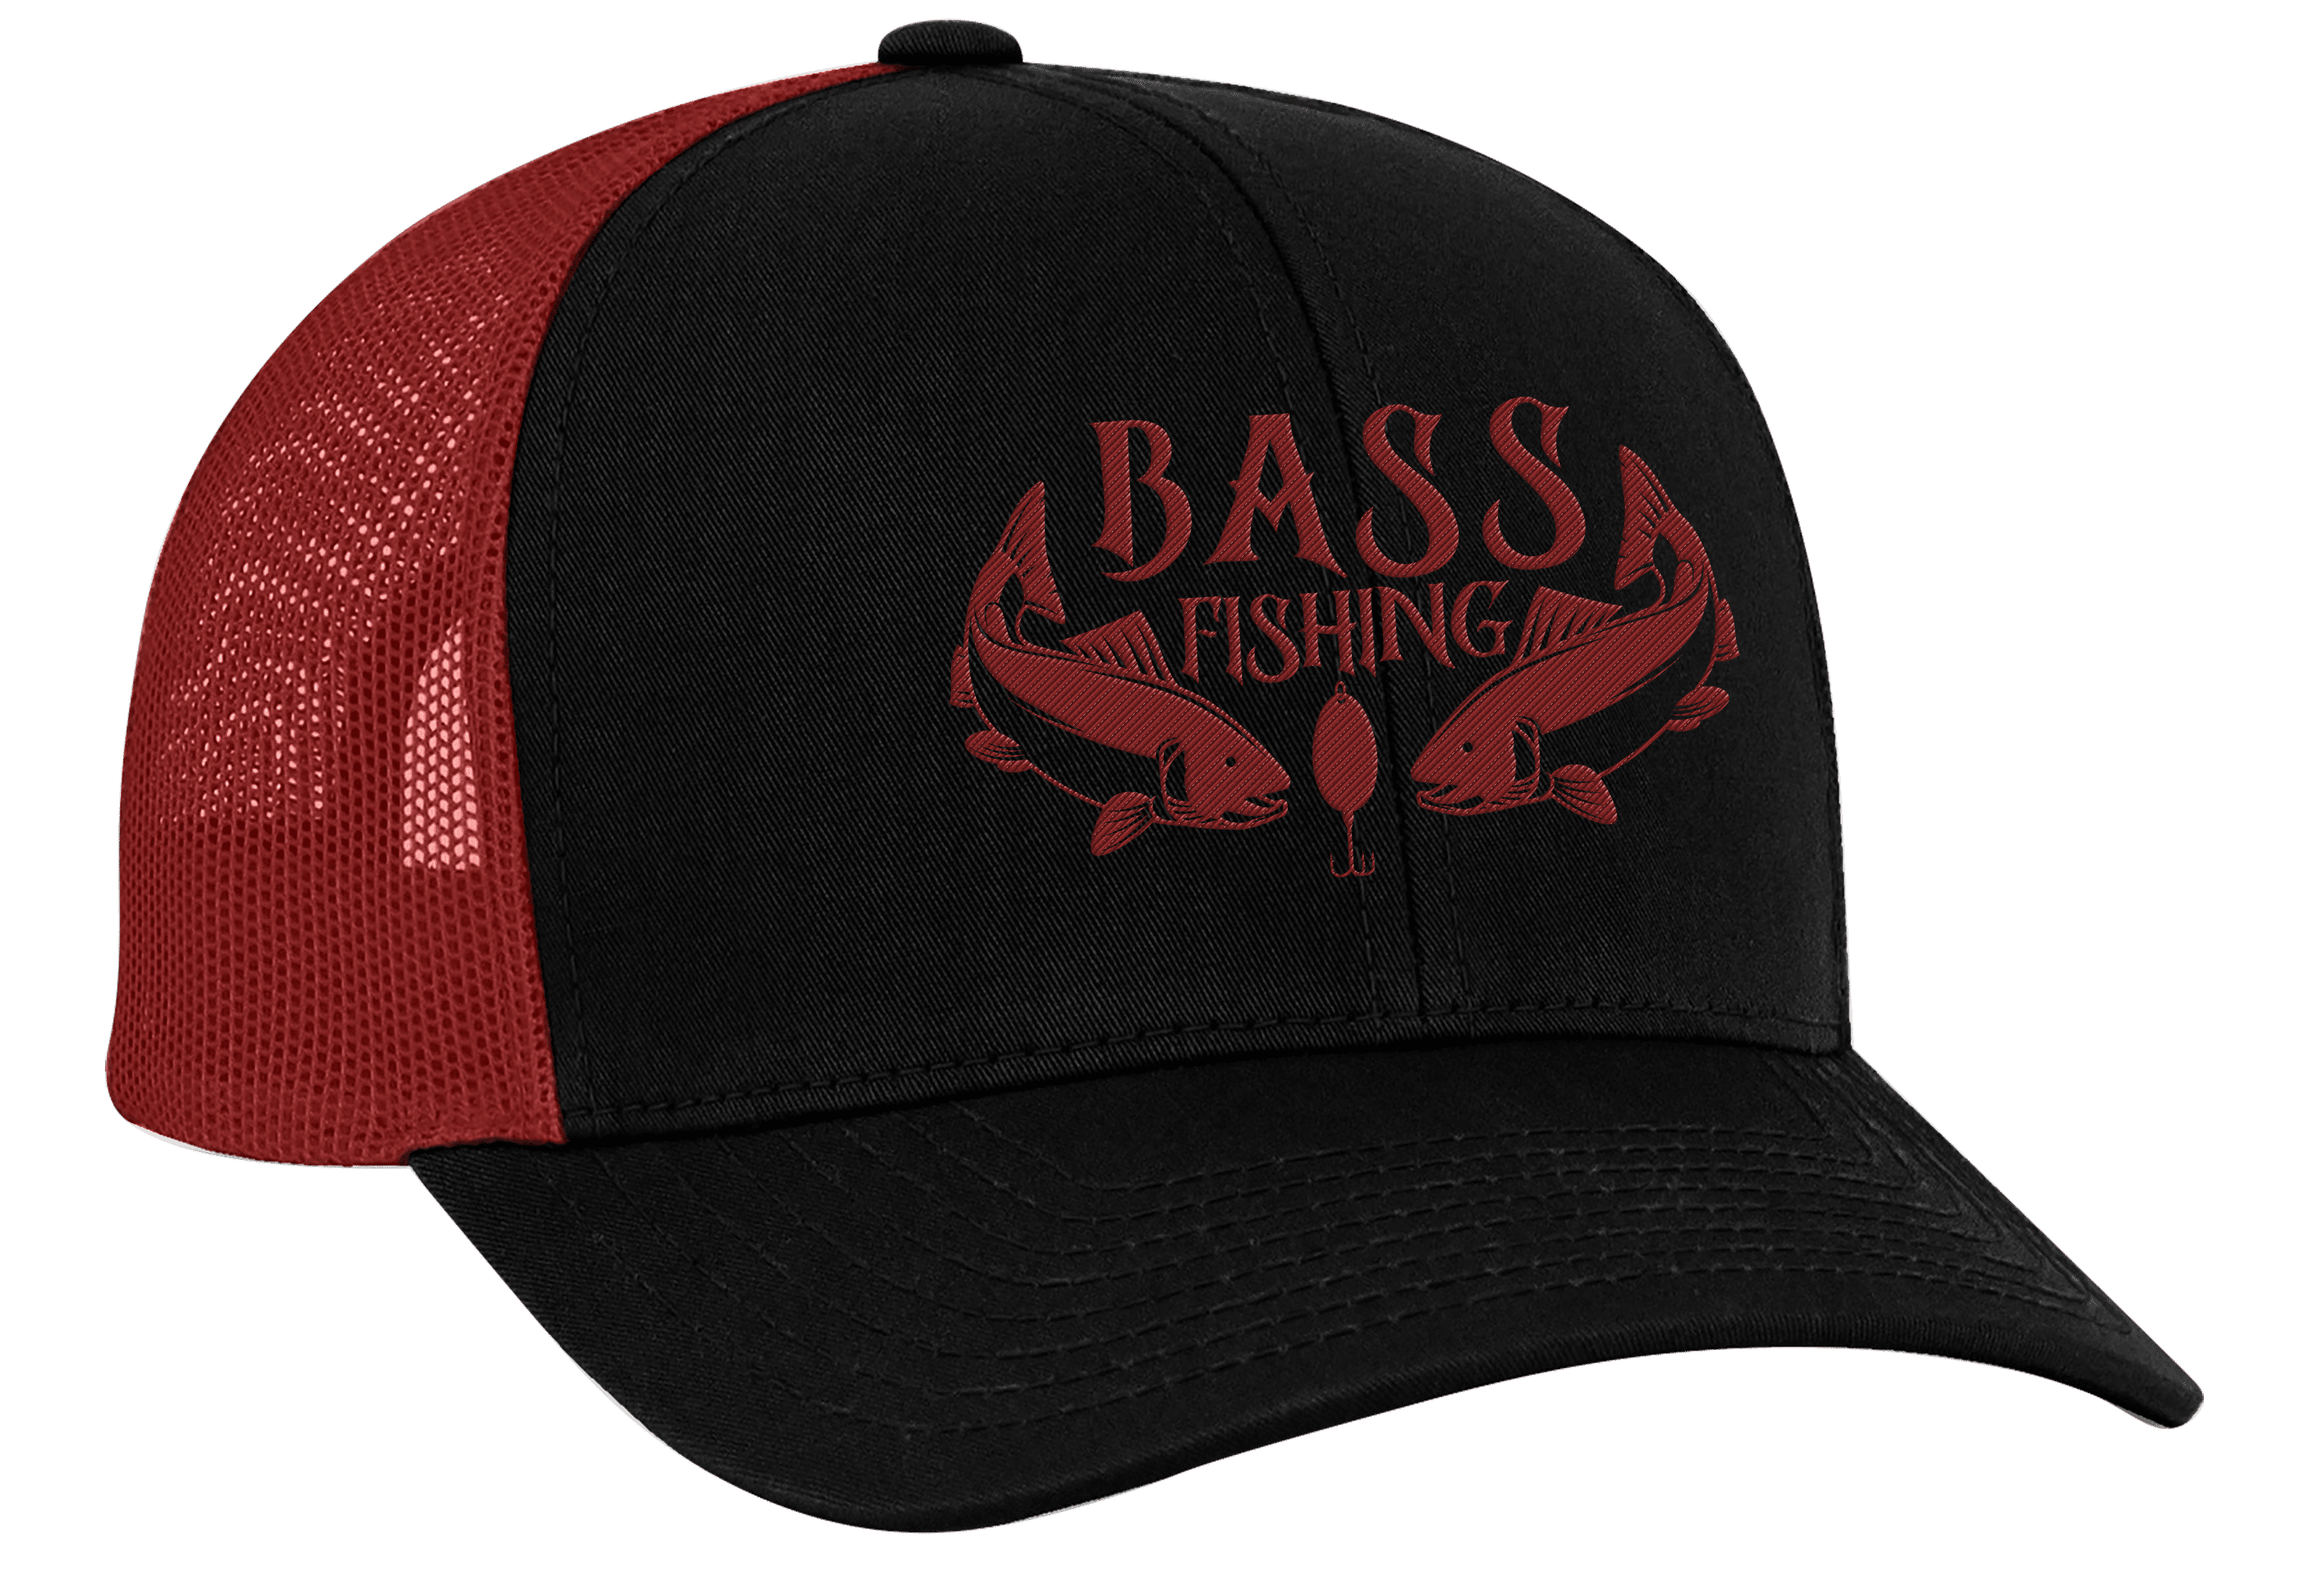 Men's Embroidered Bass Fishing Mesh Back Trucker Cap, Black/Red